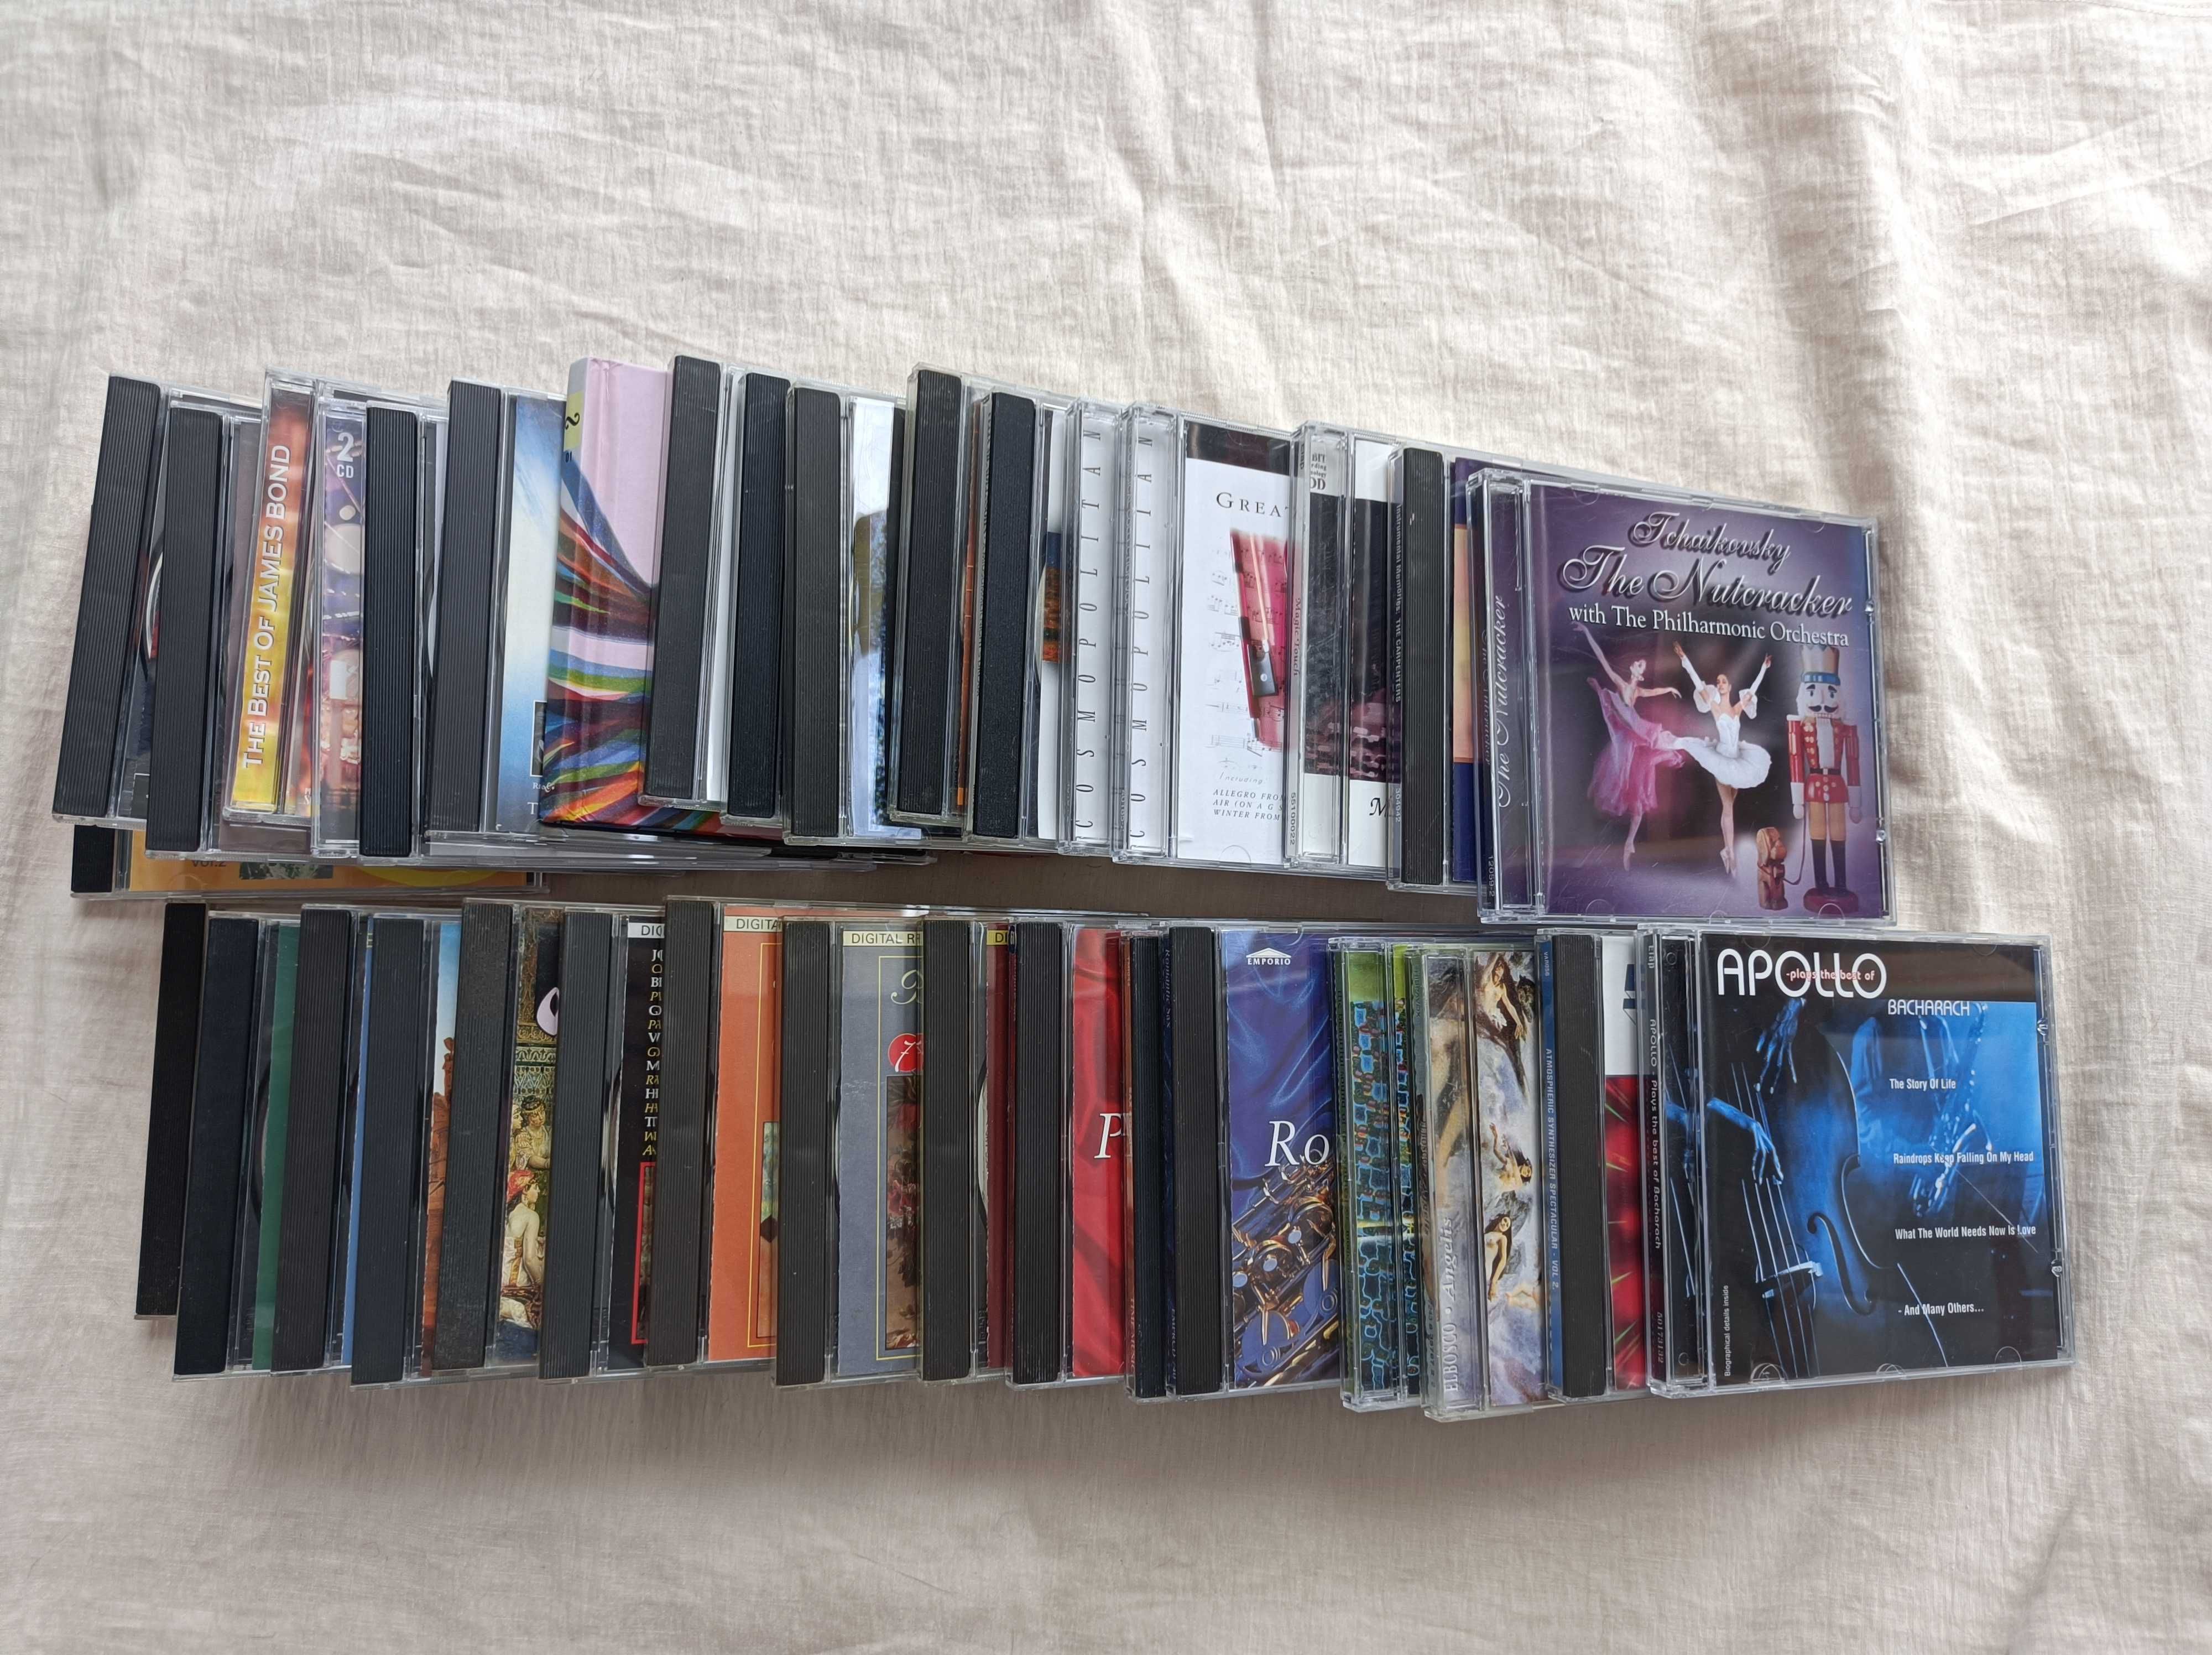 Lote de 34 CDs musica classica e instrumental